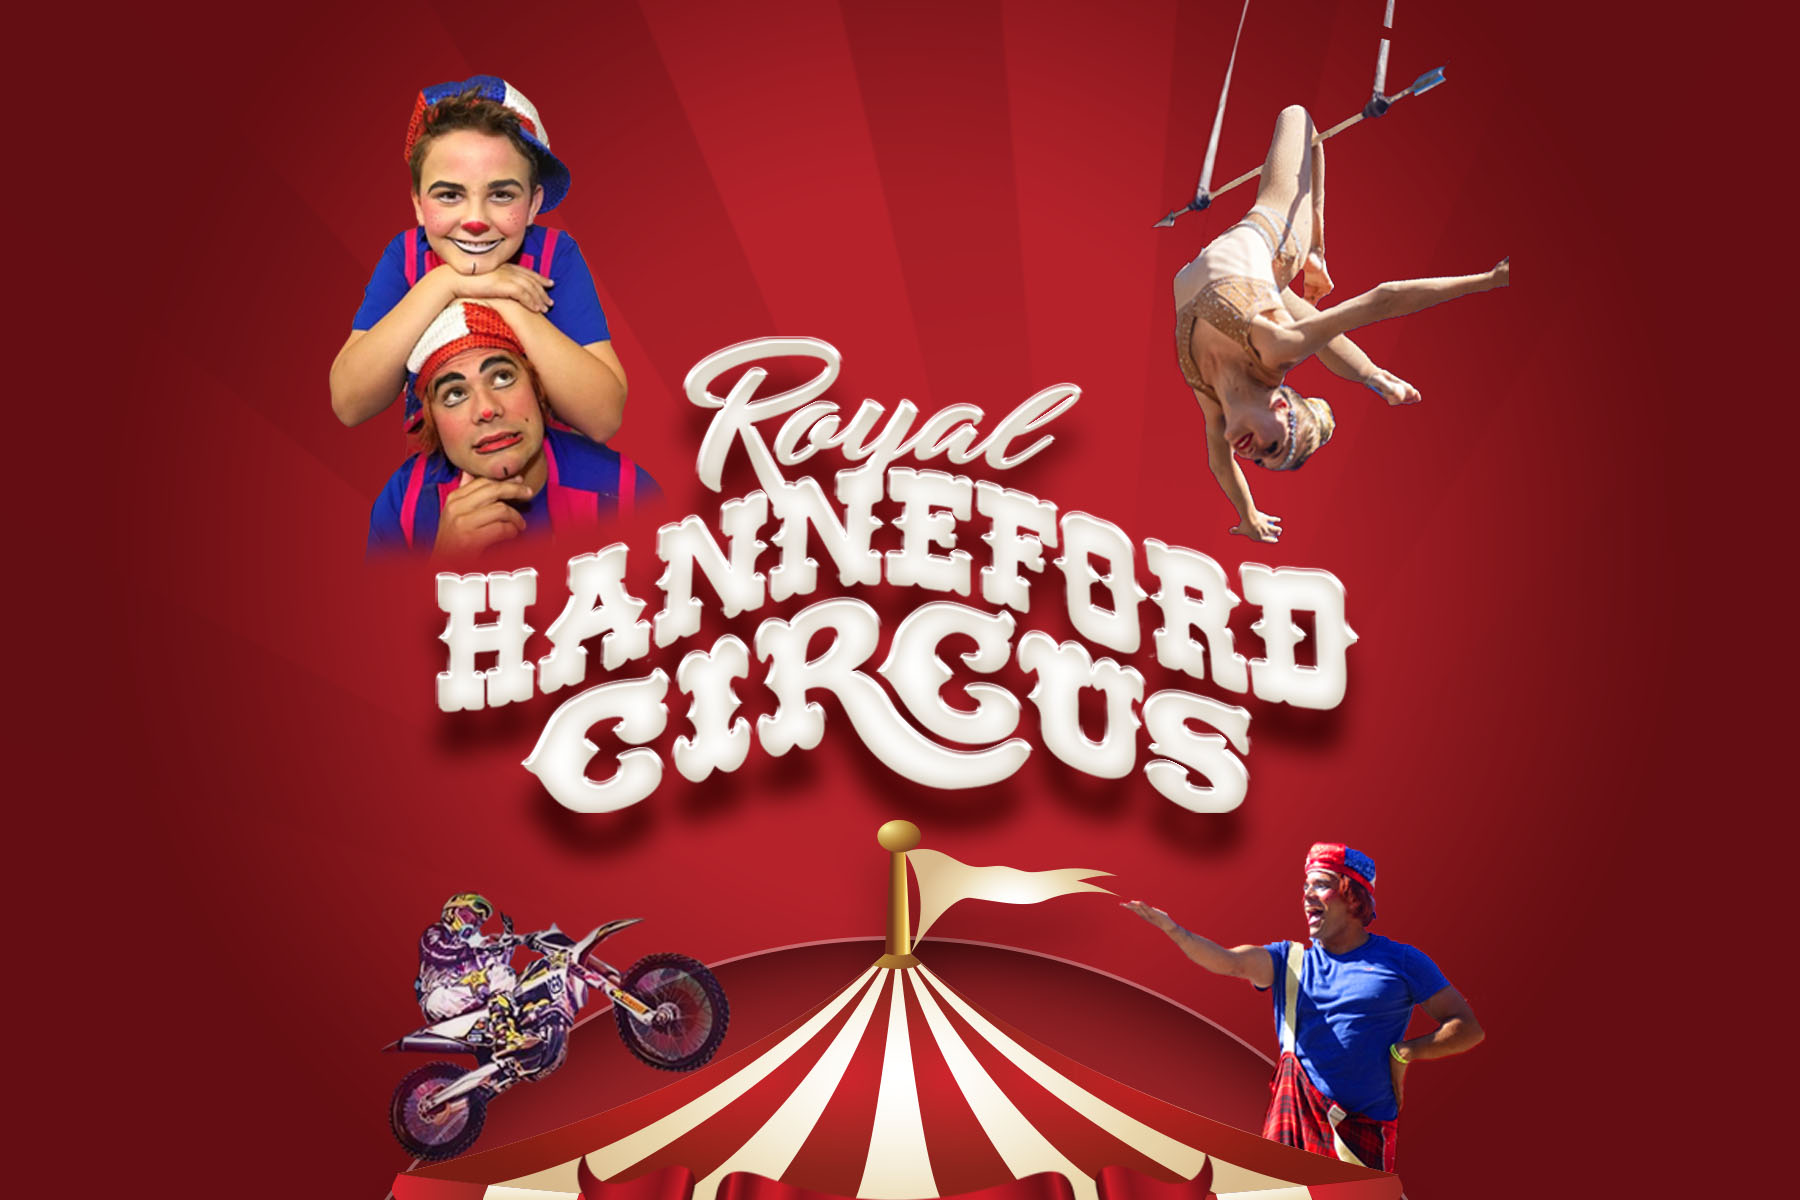 Family Circus Show 2022